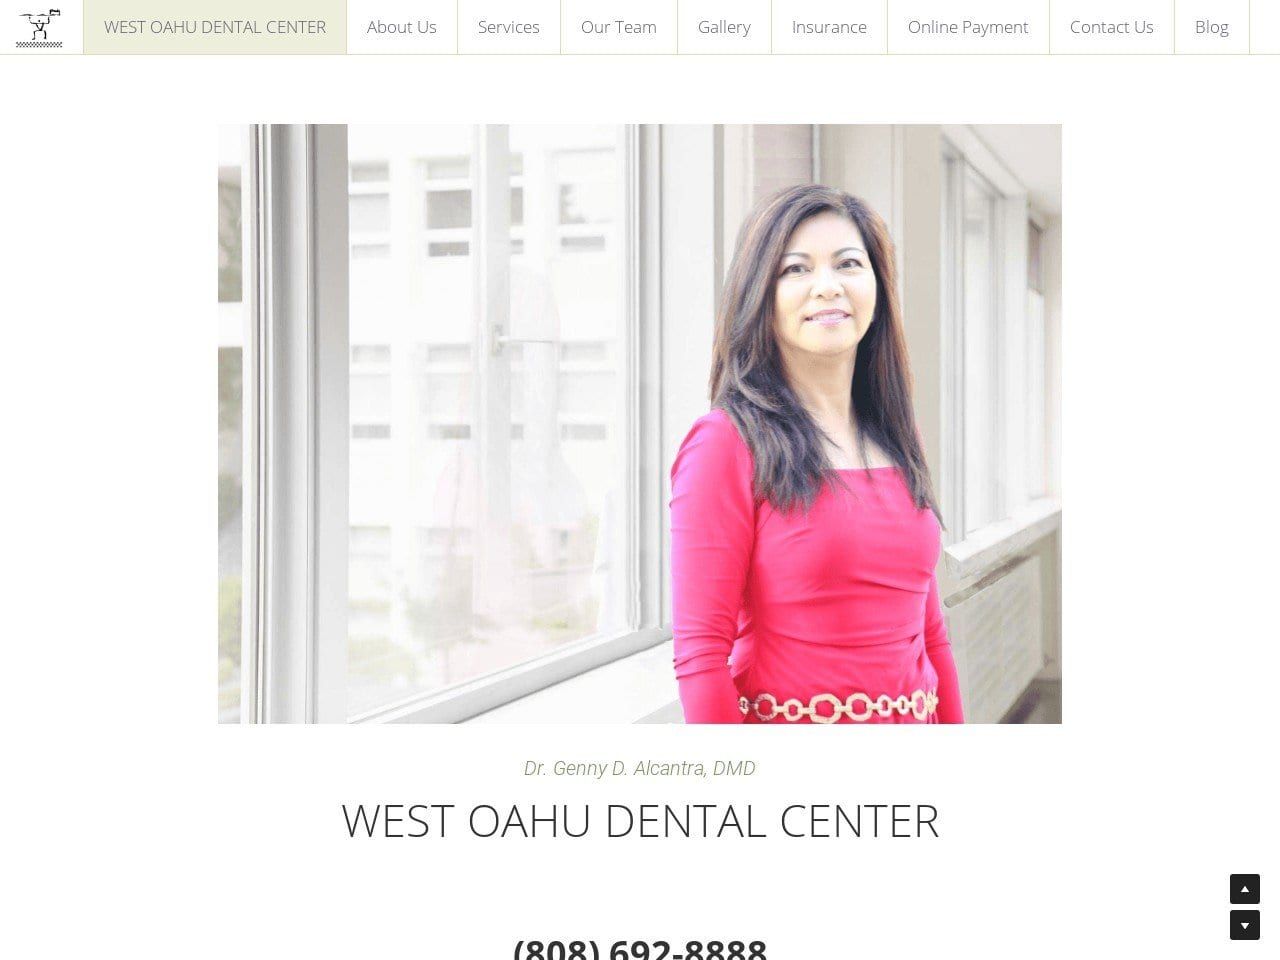 West Oahu Dental Center Website Screenshot from westoahudentalcenter.com